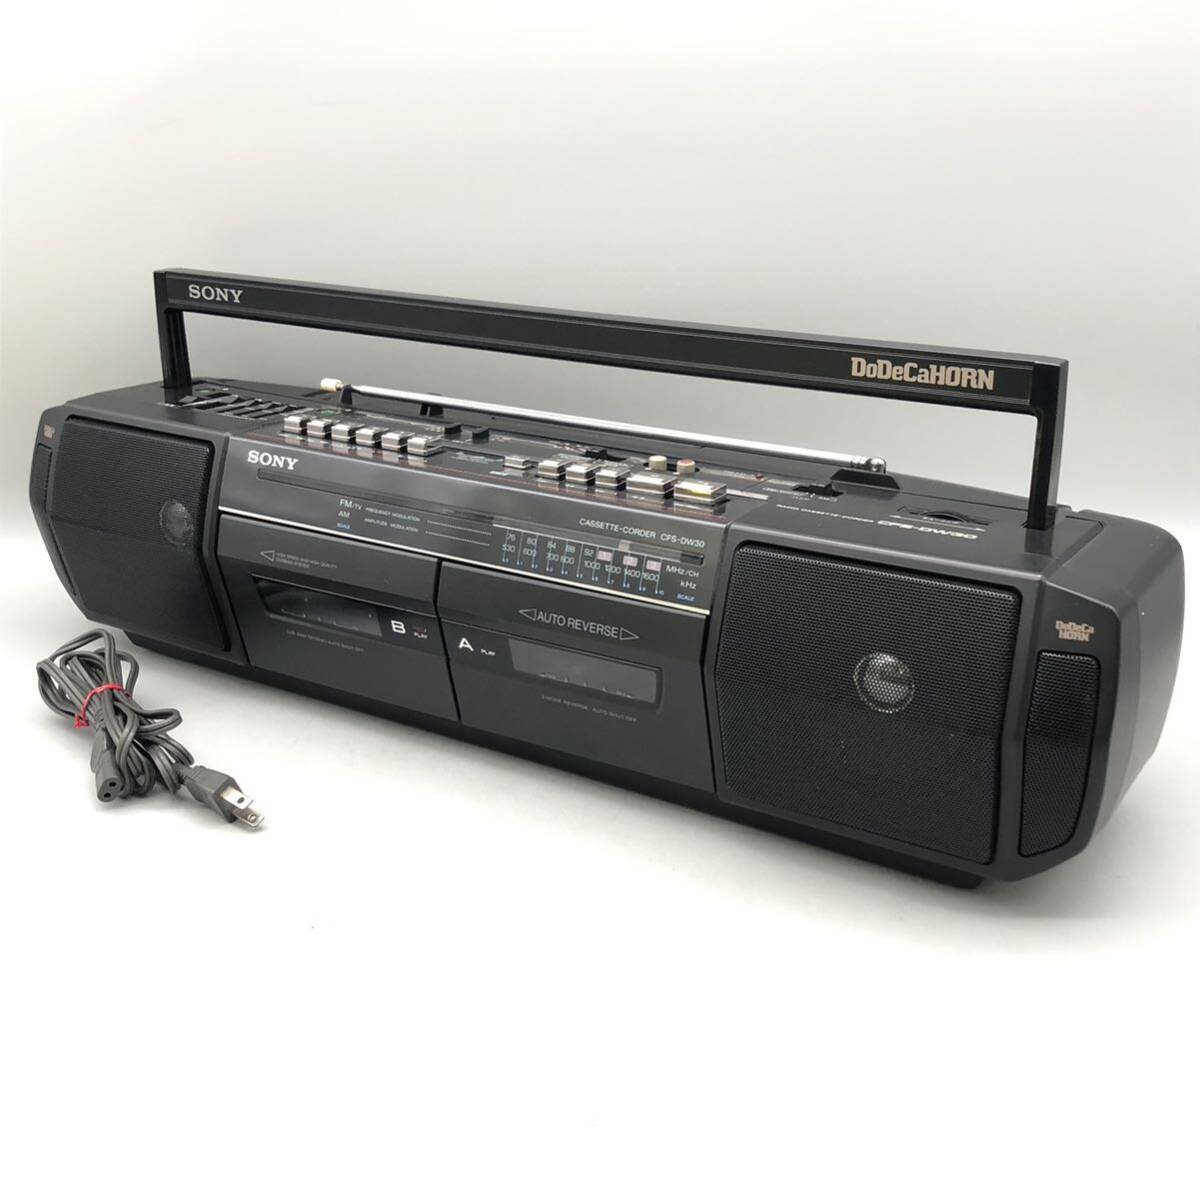 [ beautiful goods ] SONY Sony DoDeCaHORNdoteka horn CFS-DW30 radio-cassette body radio stereo cassette recorder box attaching operation verification ending rare 